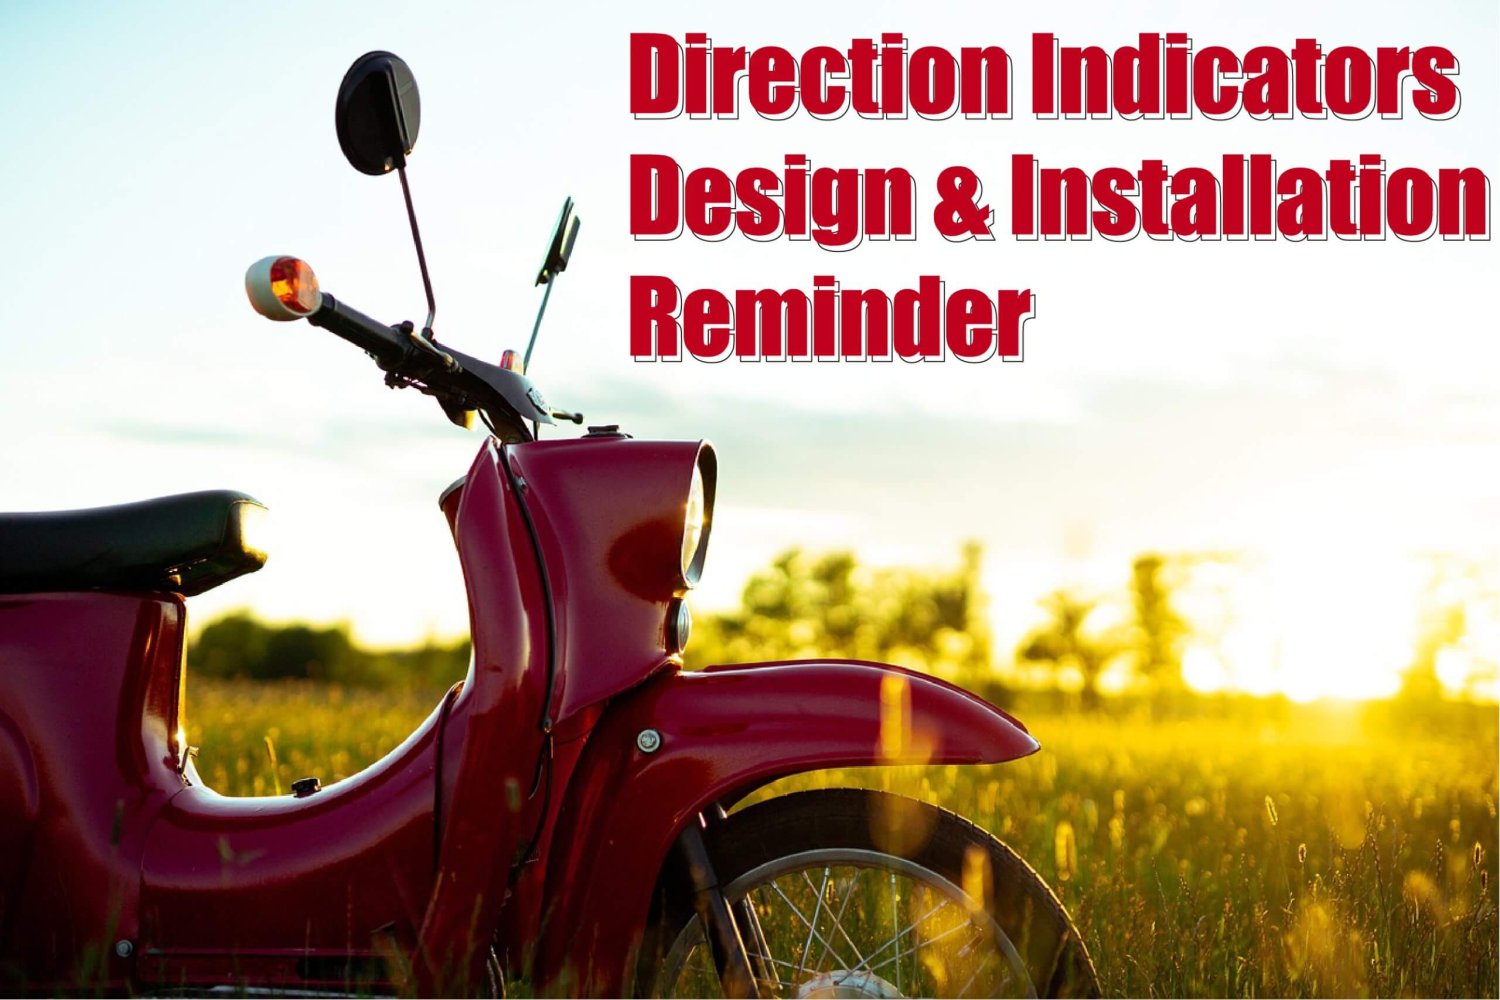 Direction Indicators Design & Installation Reminder_1-01